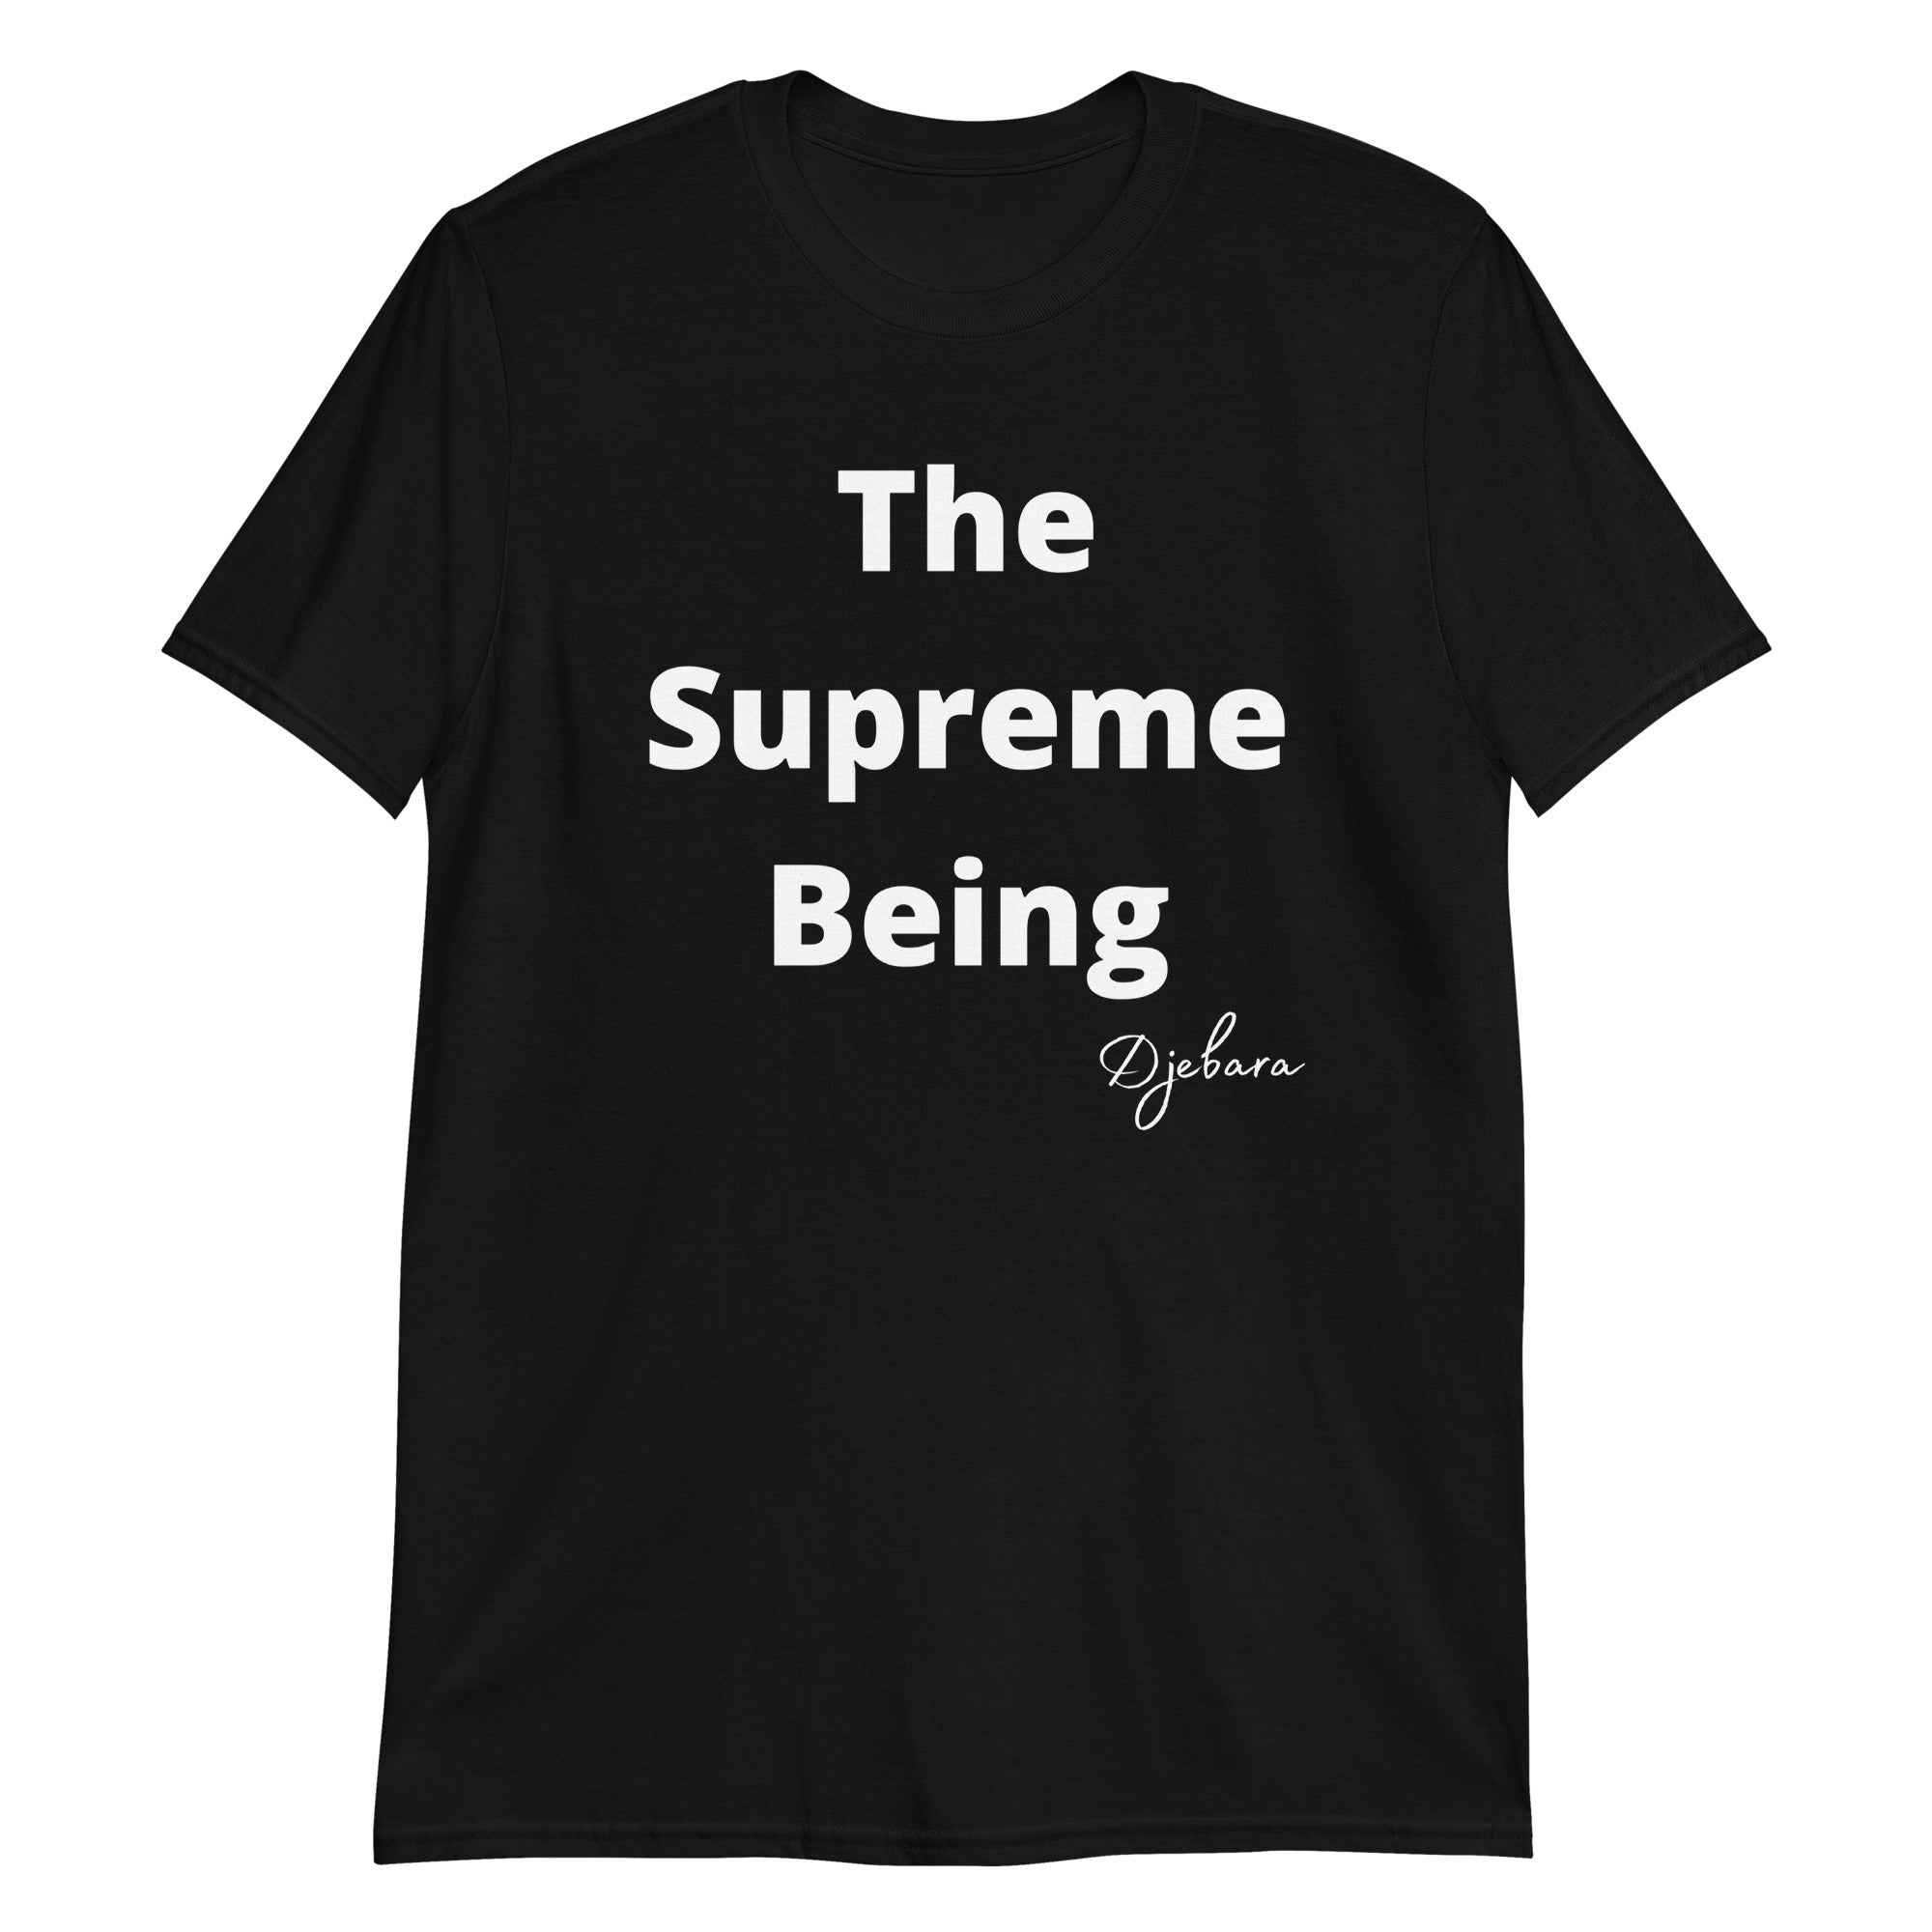 The Supreme Being Short-Sleeve Gildan Unisex T-Shirt S-3XL